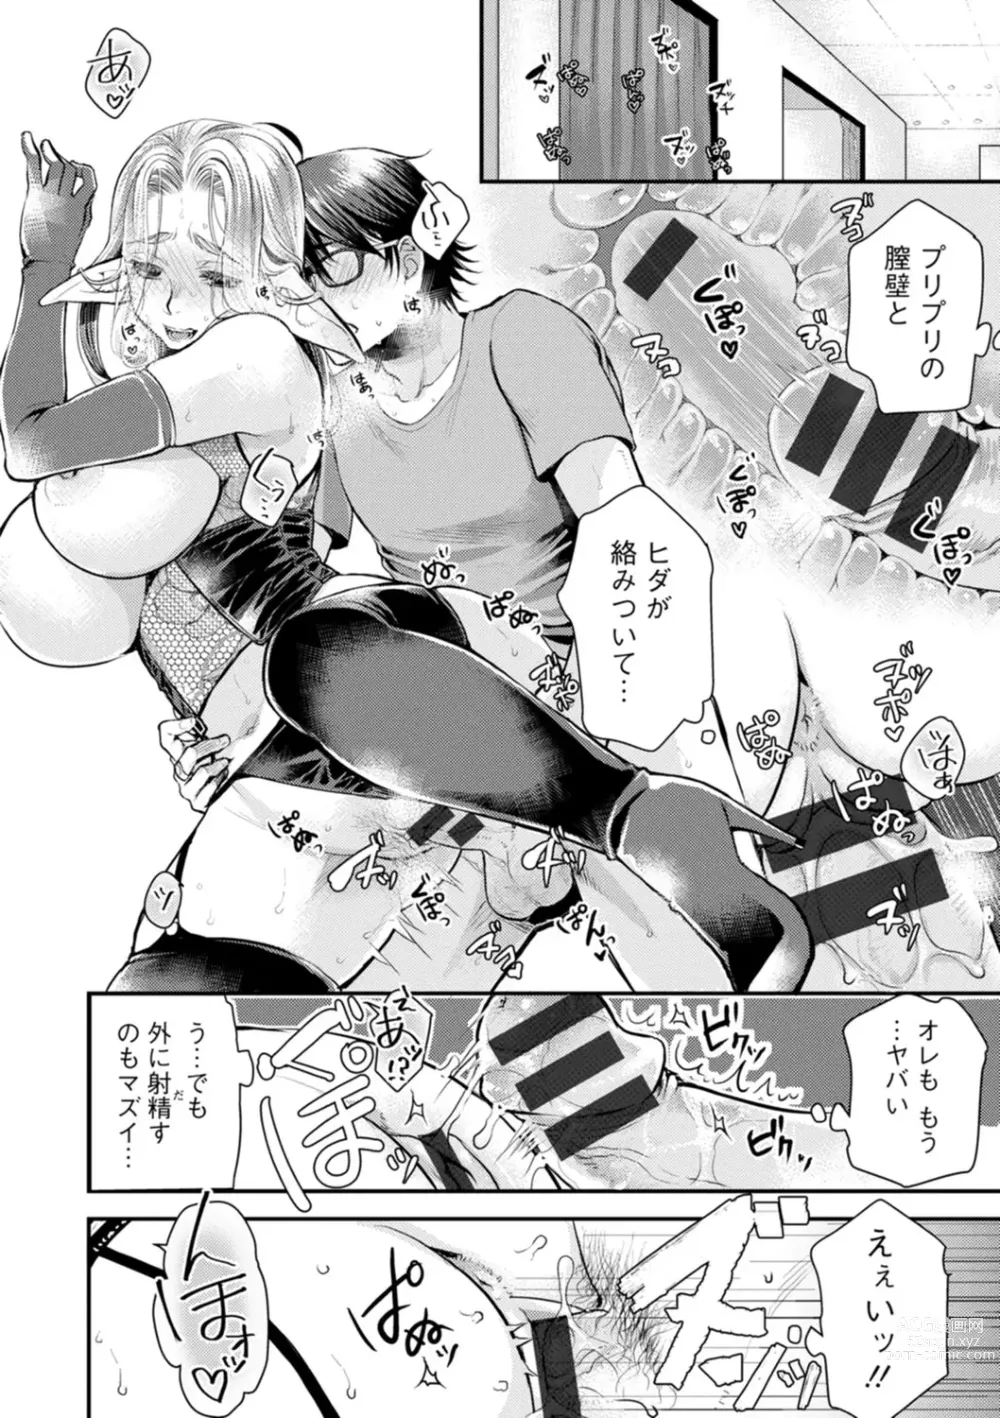 Page 190 of manga Sex x Meshi